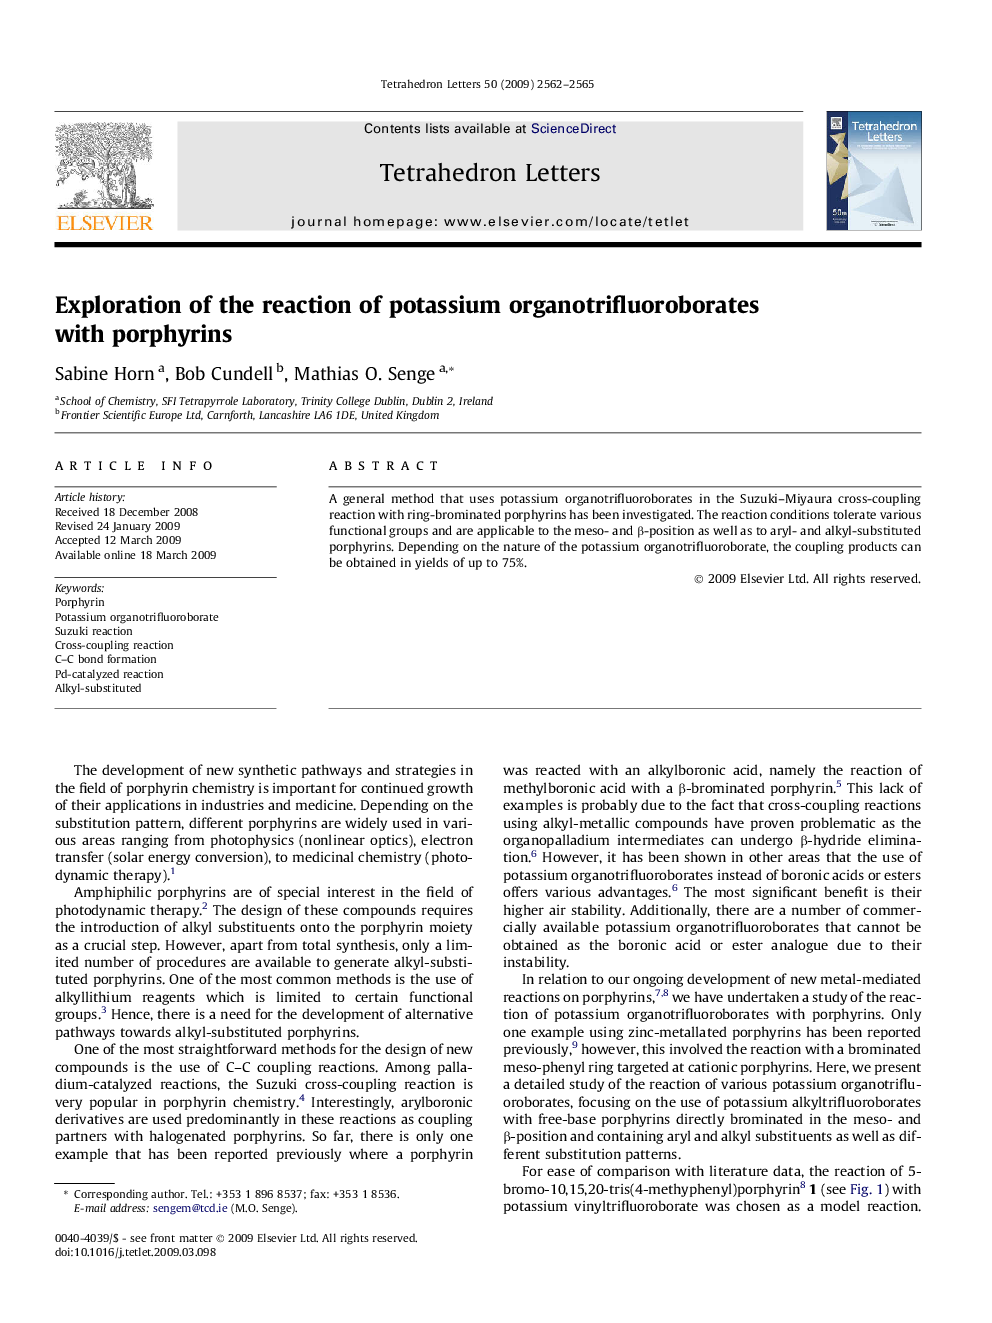 Exploration of the reaction of potassium organotrifluoroborates with porphyrins